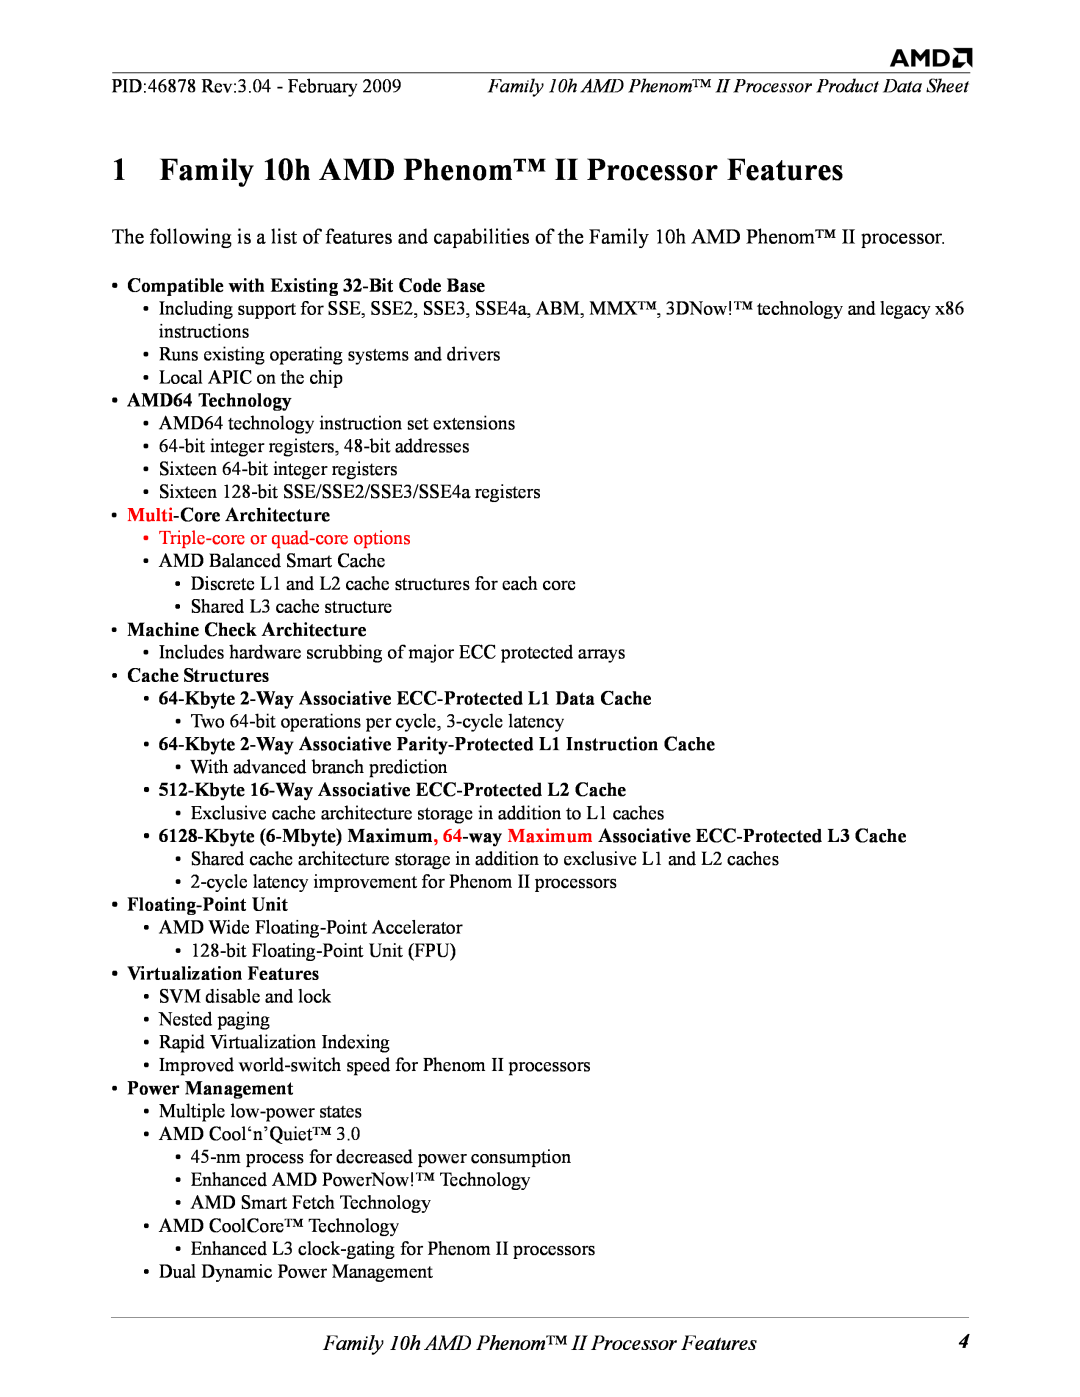 AMD manual Family 10h AMD Phenom II Processor Features 